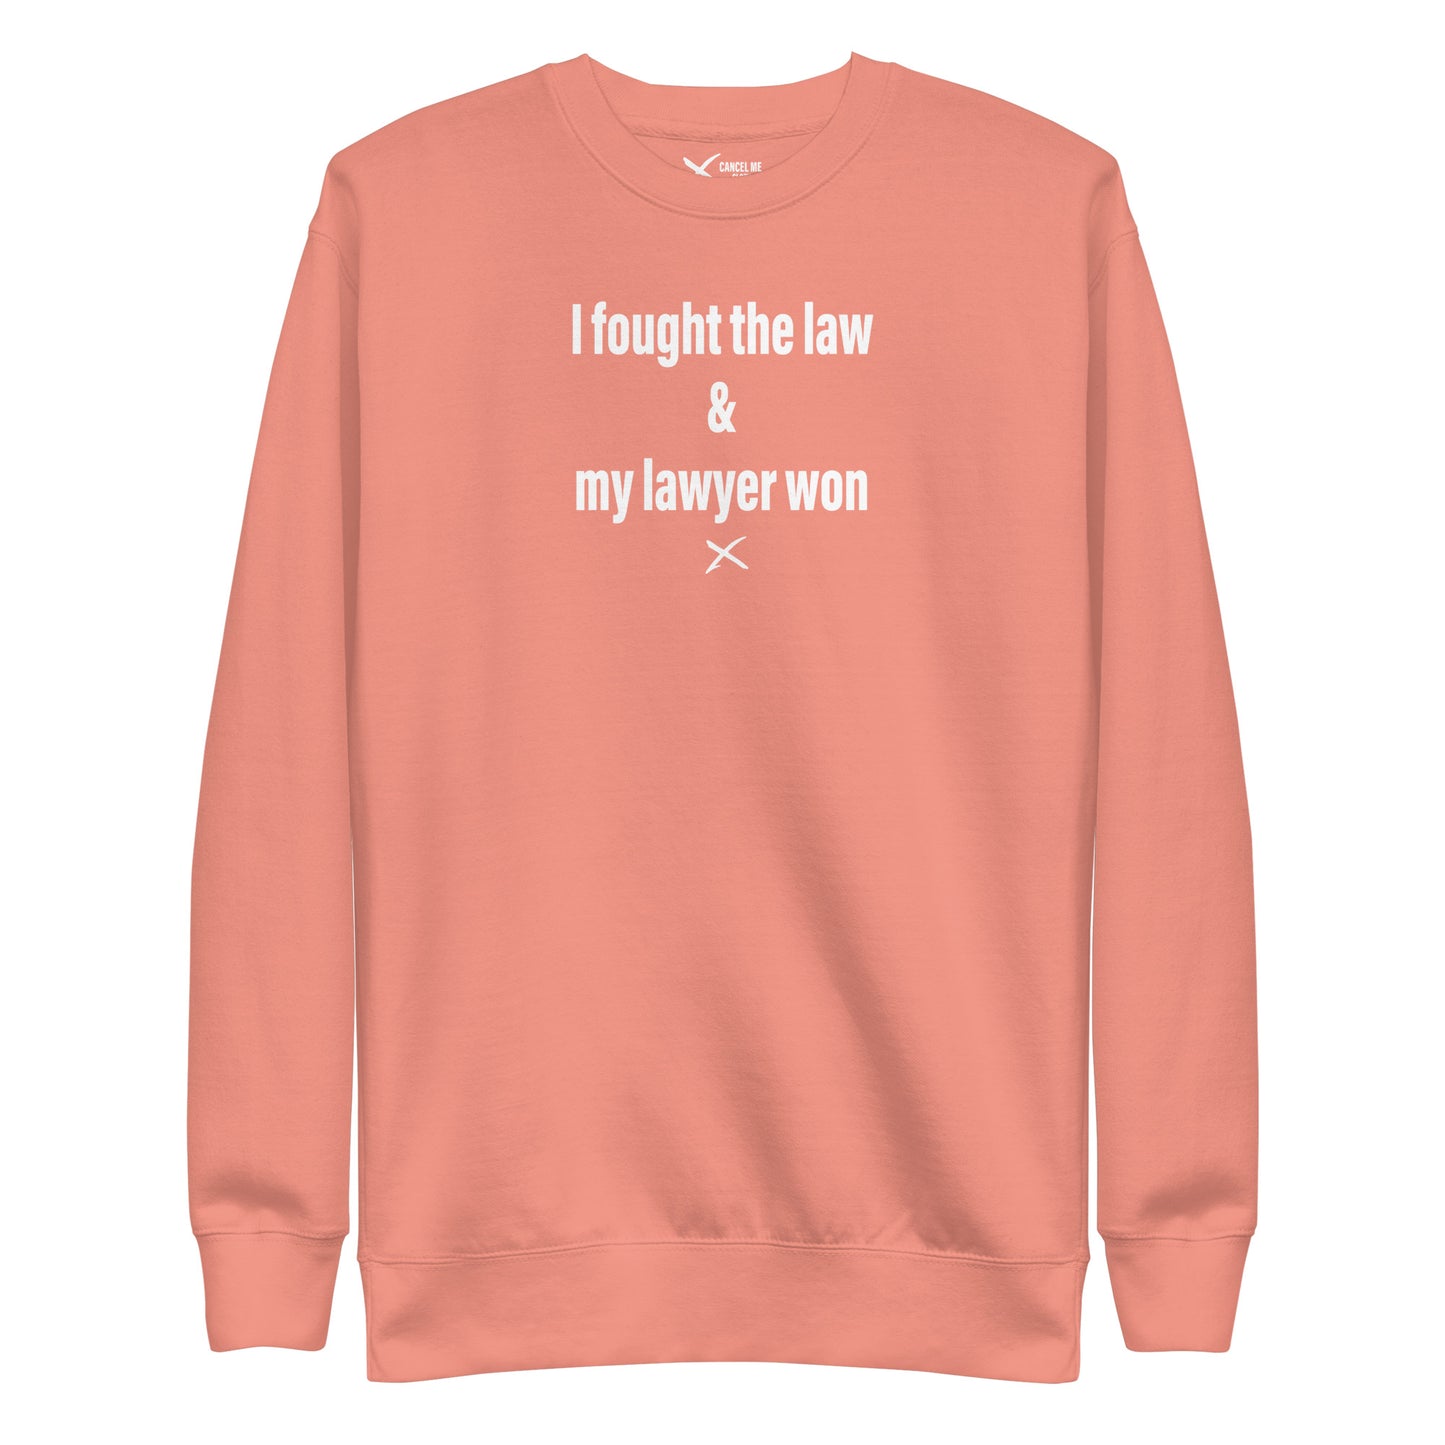 I fought the law & my lawyer won - Sweatshirt